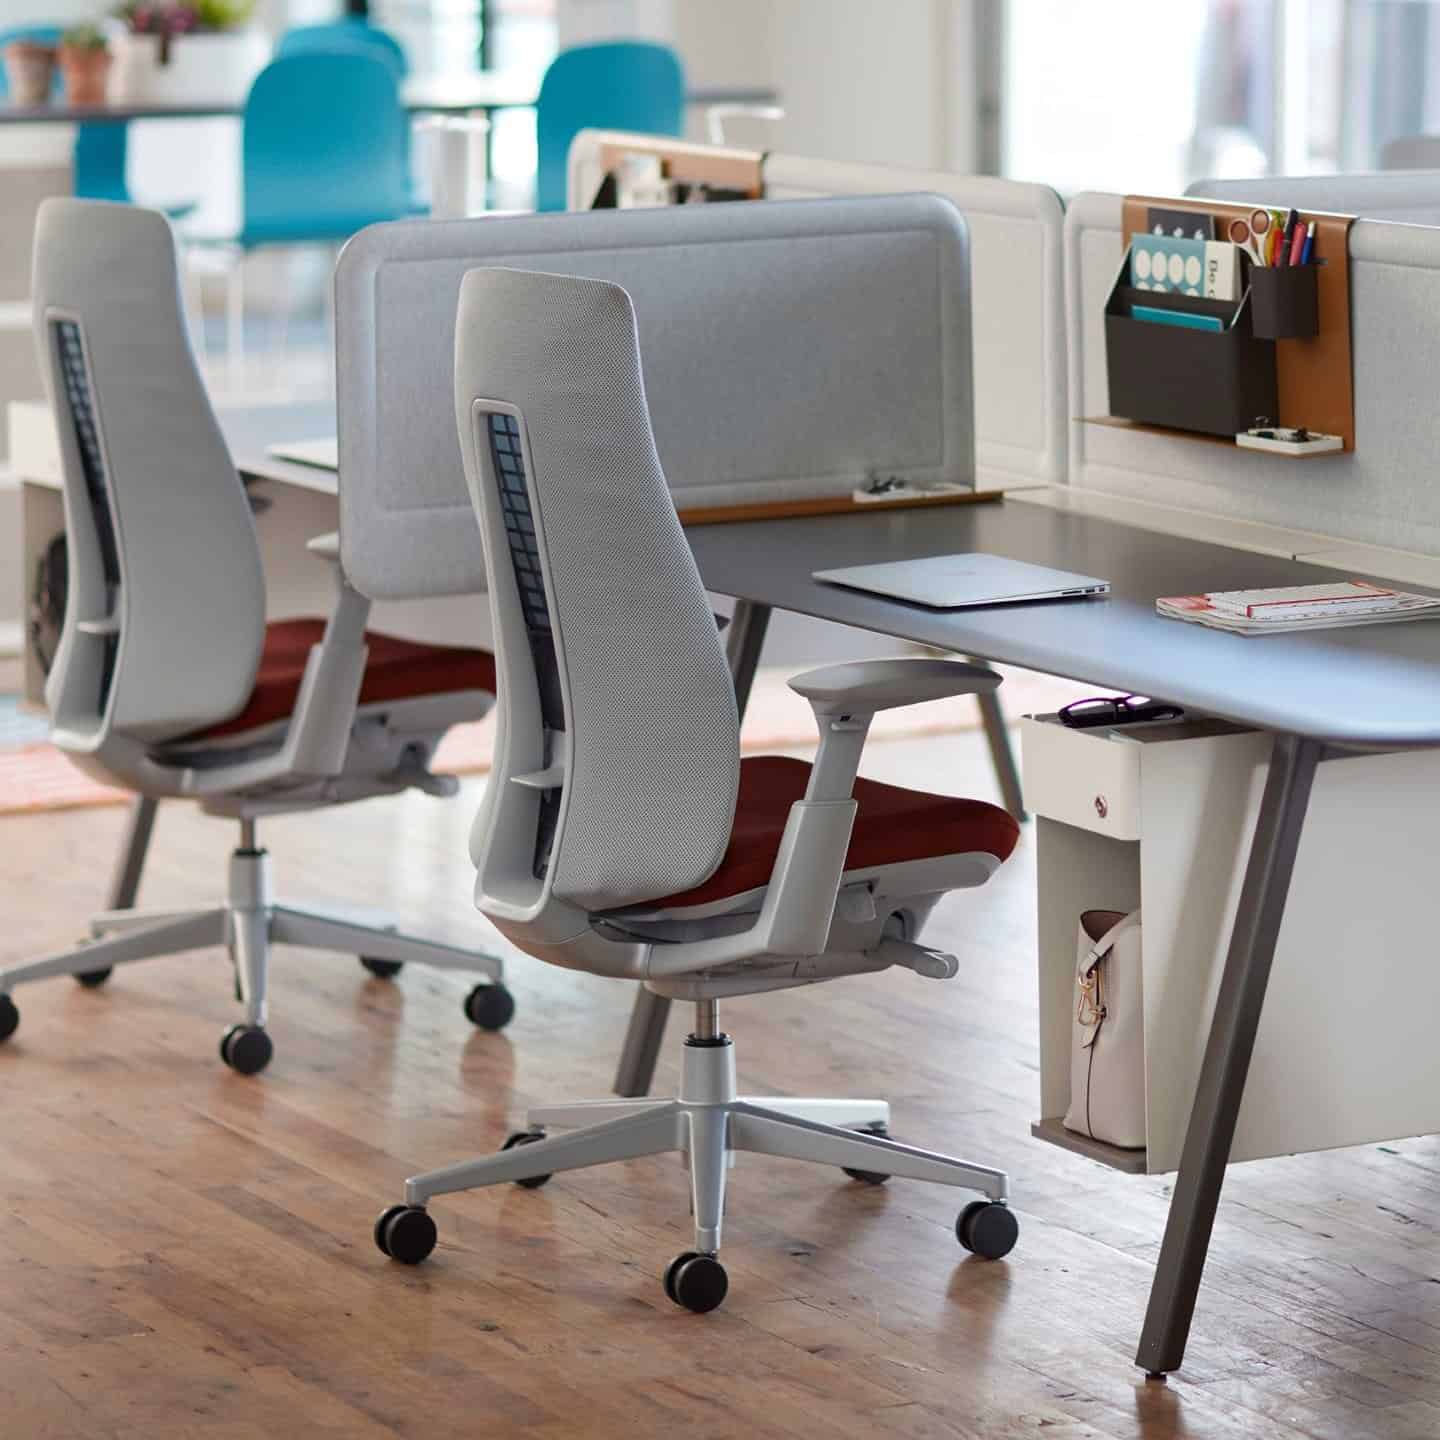 Haworth fern ergonomic office chair at best price